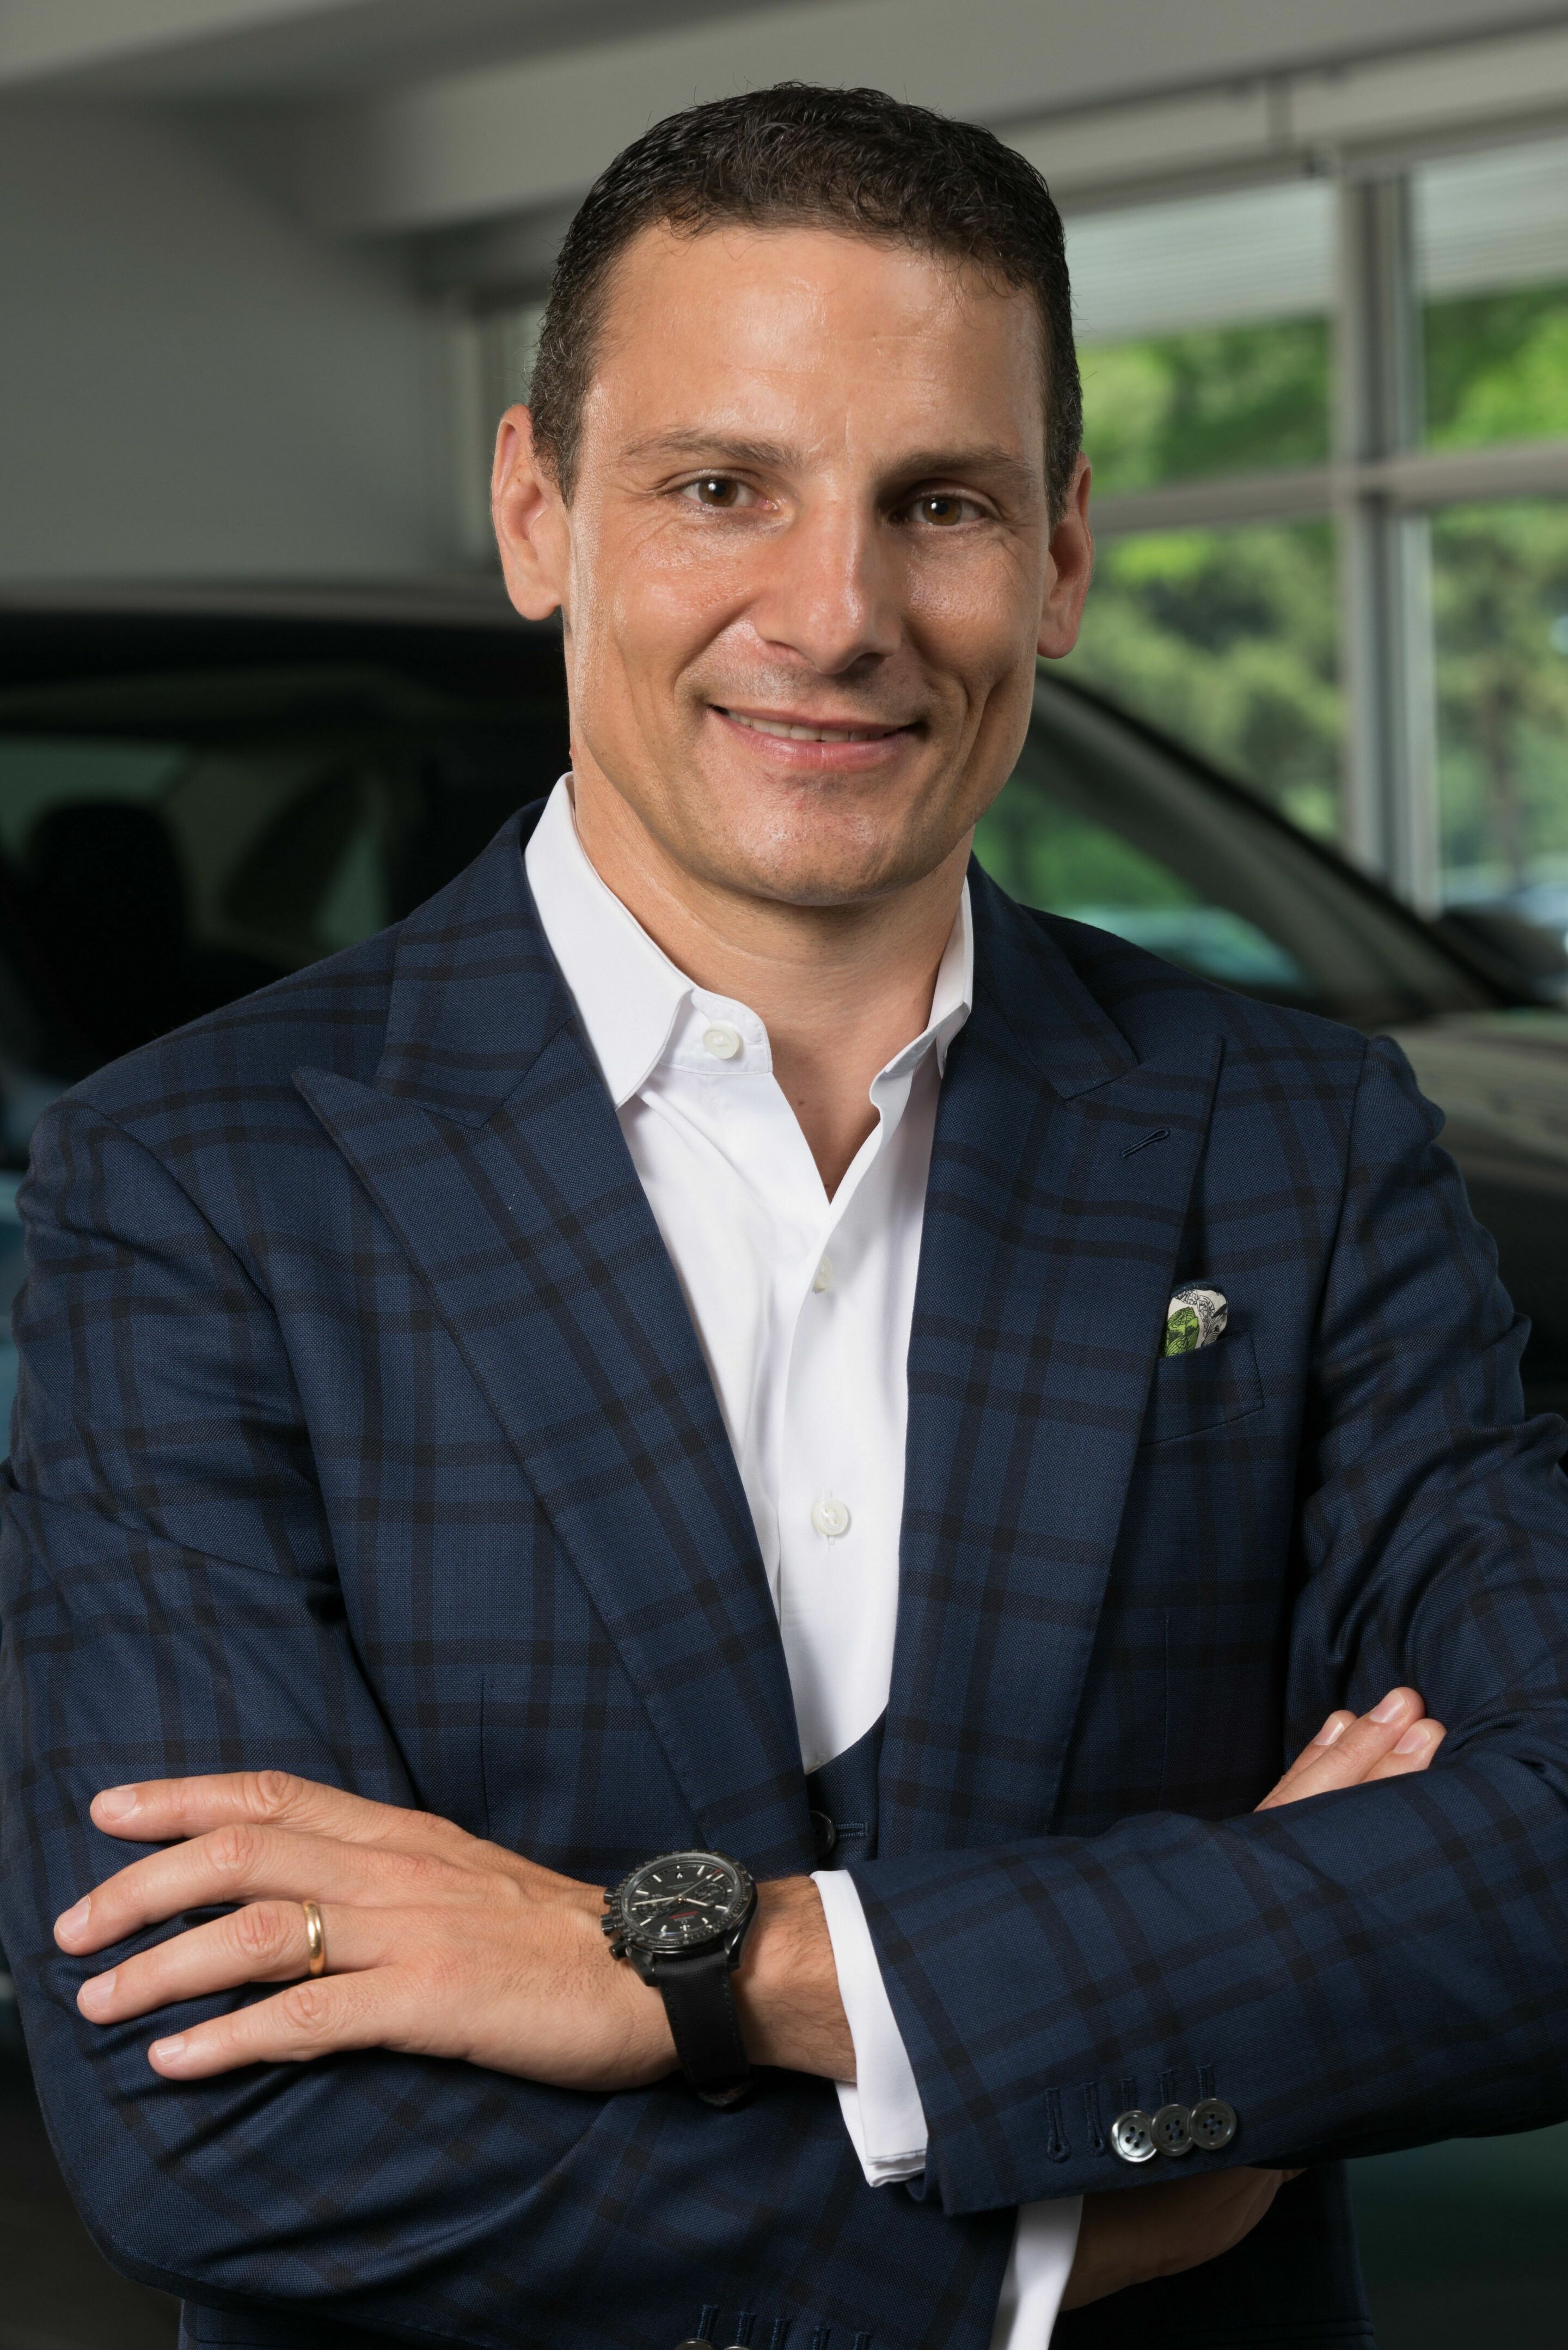 Daniel Weissland to lead Audi of America as President